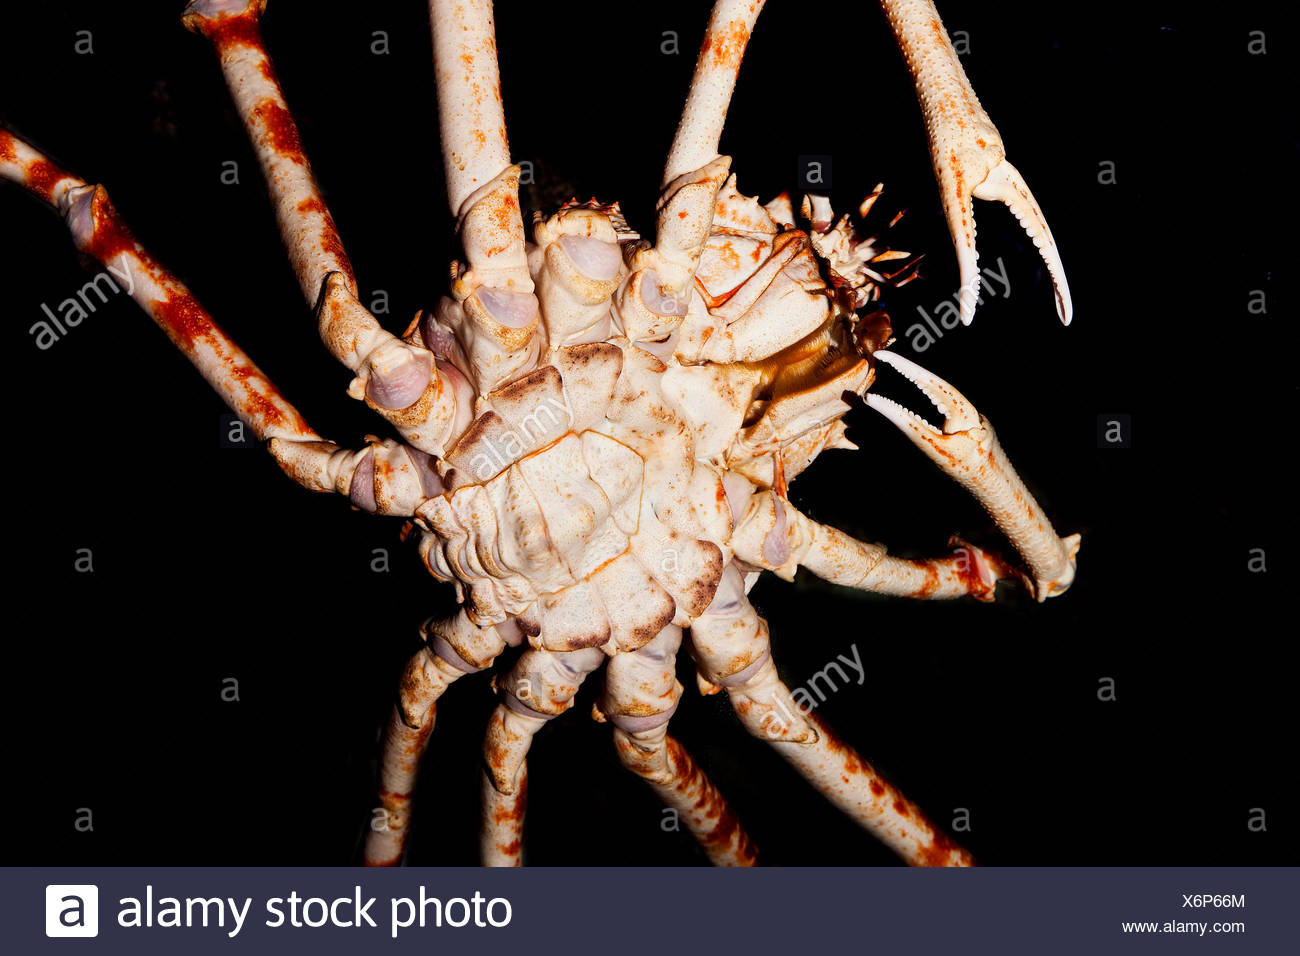 Japanese Spider Crab Or Giant Spider Crab Macrocheira Kaempferi Adult Underside View Stock Photo Alamy